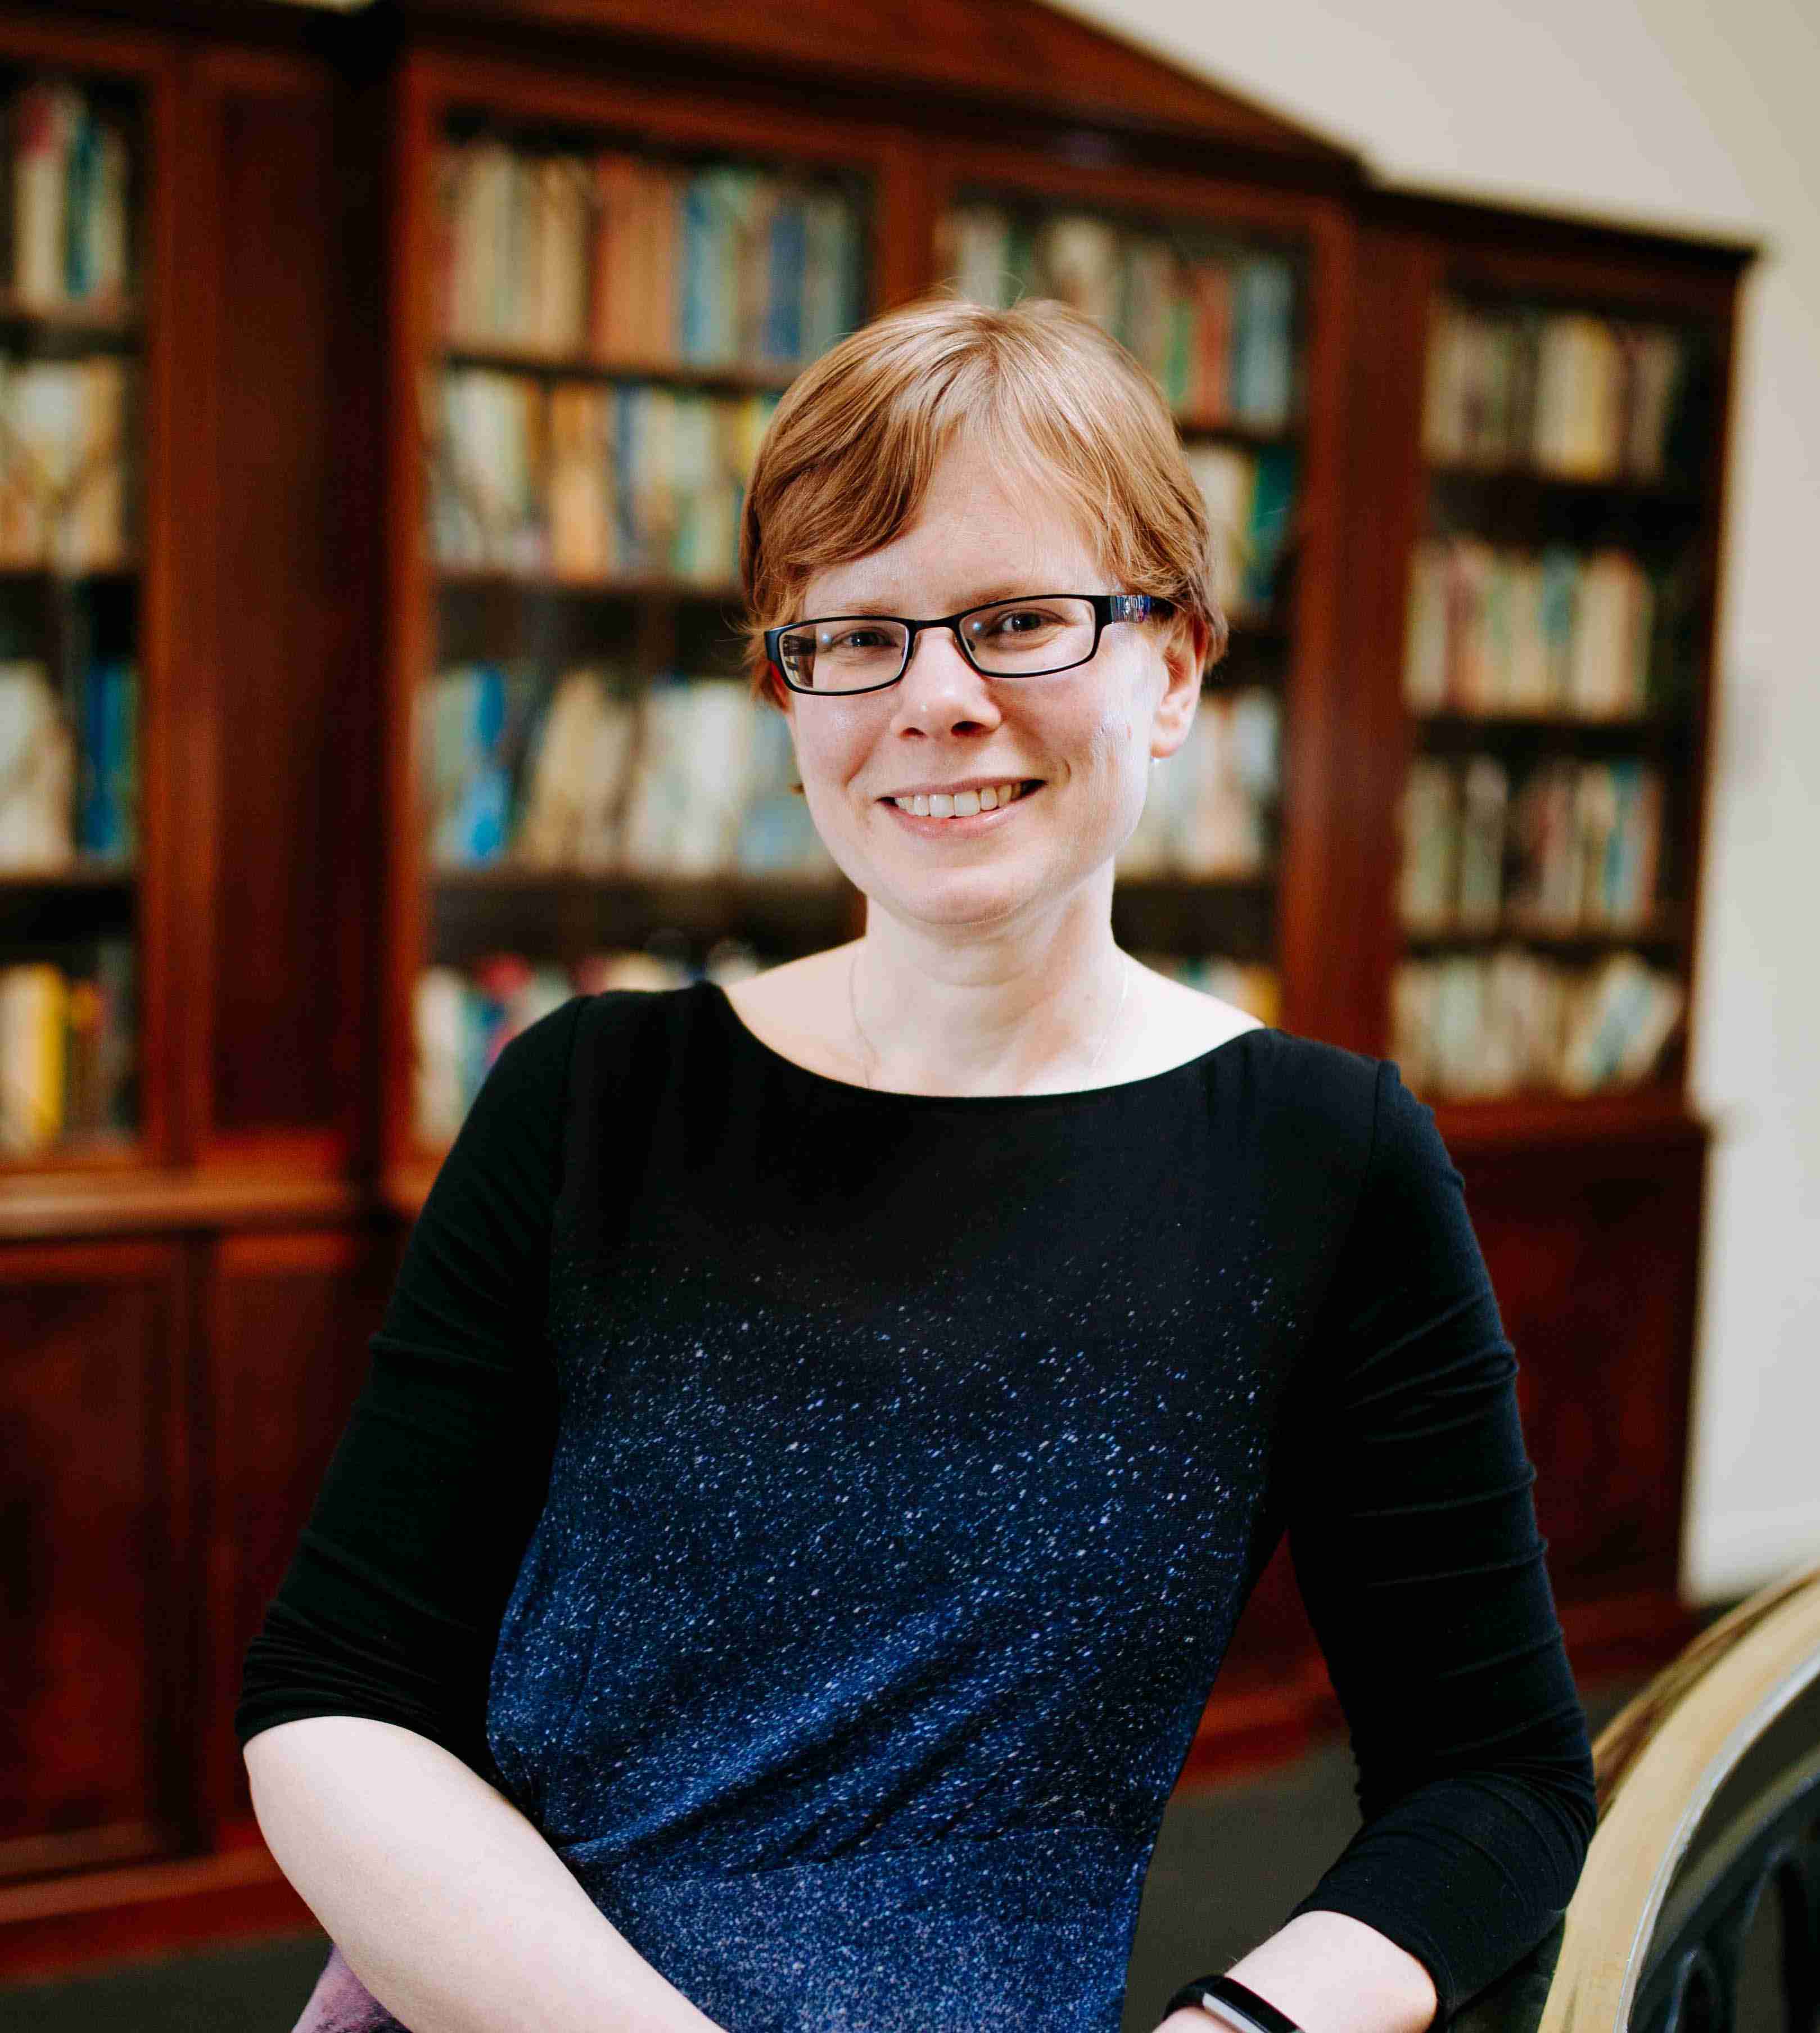 Profile image of Professor Lesley Morrell